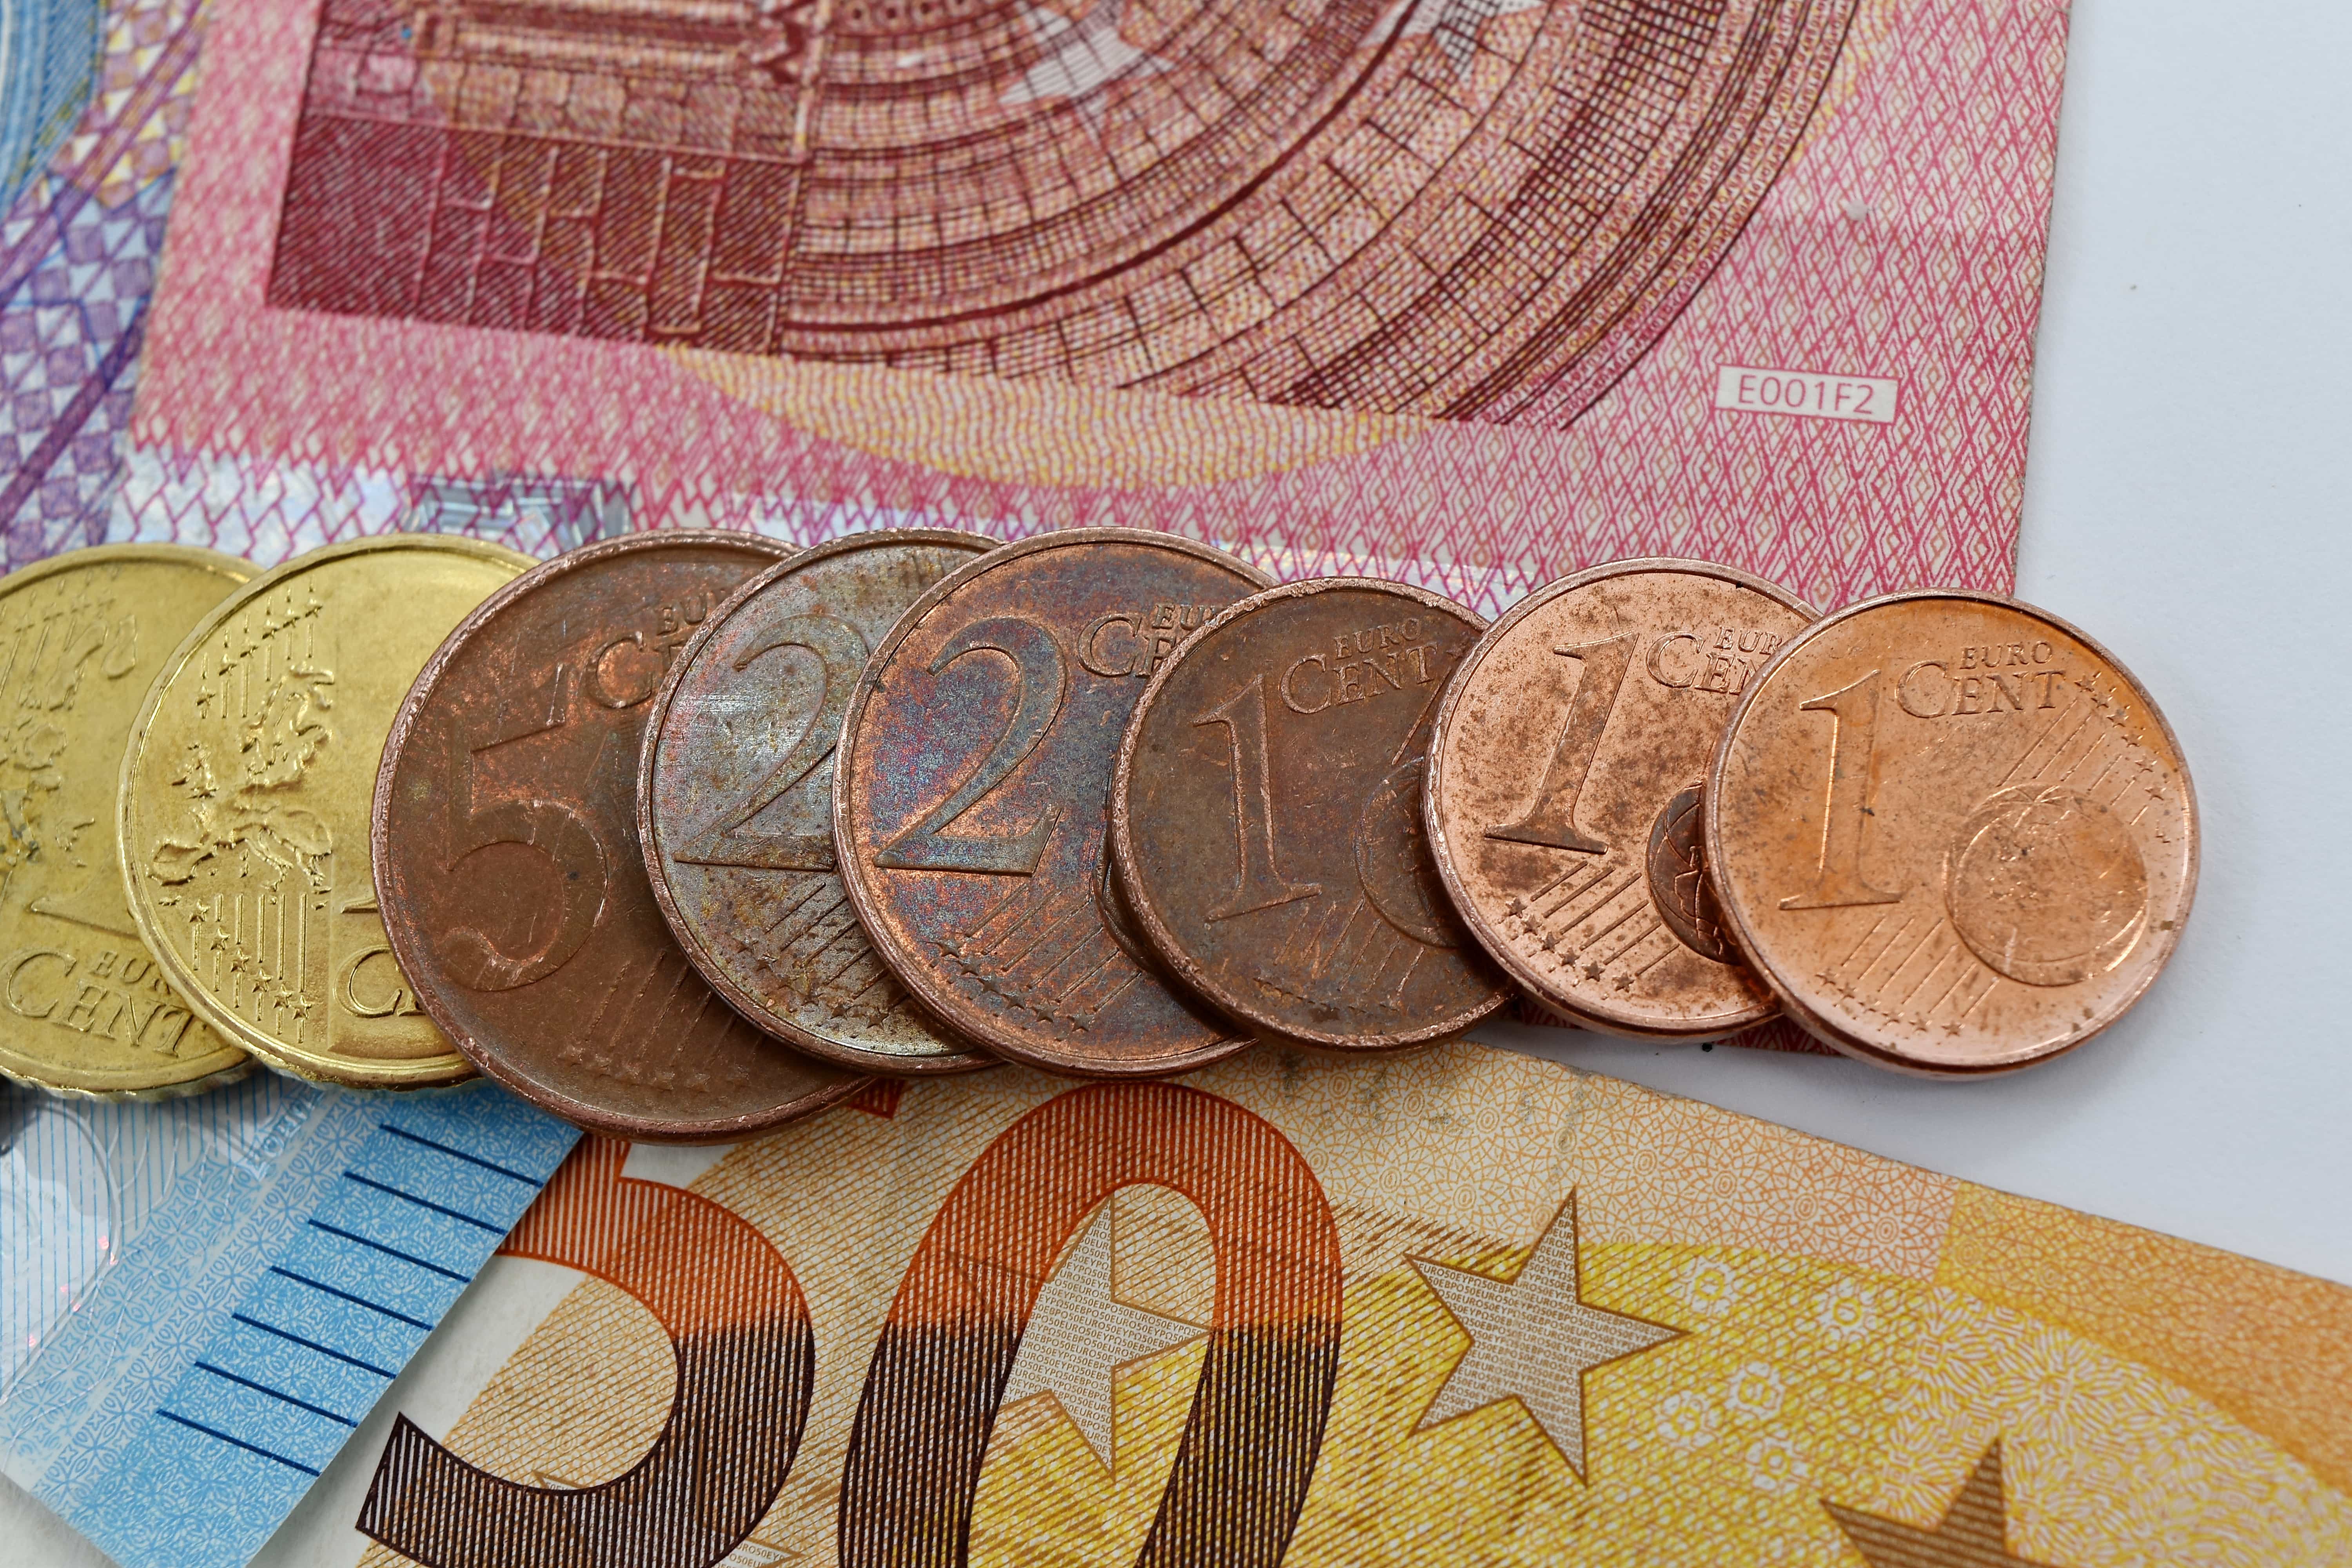 Free picture: cent, coins, copper, euro, European, finance, money, rich, value, change